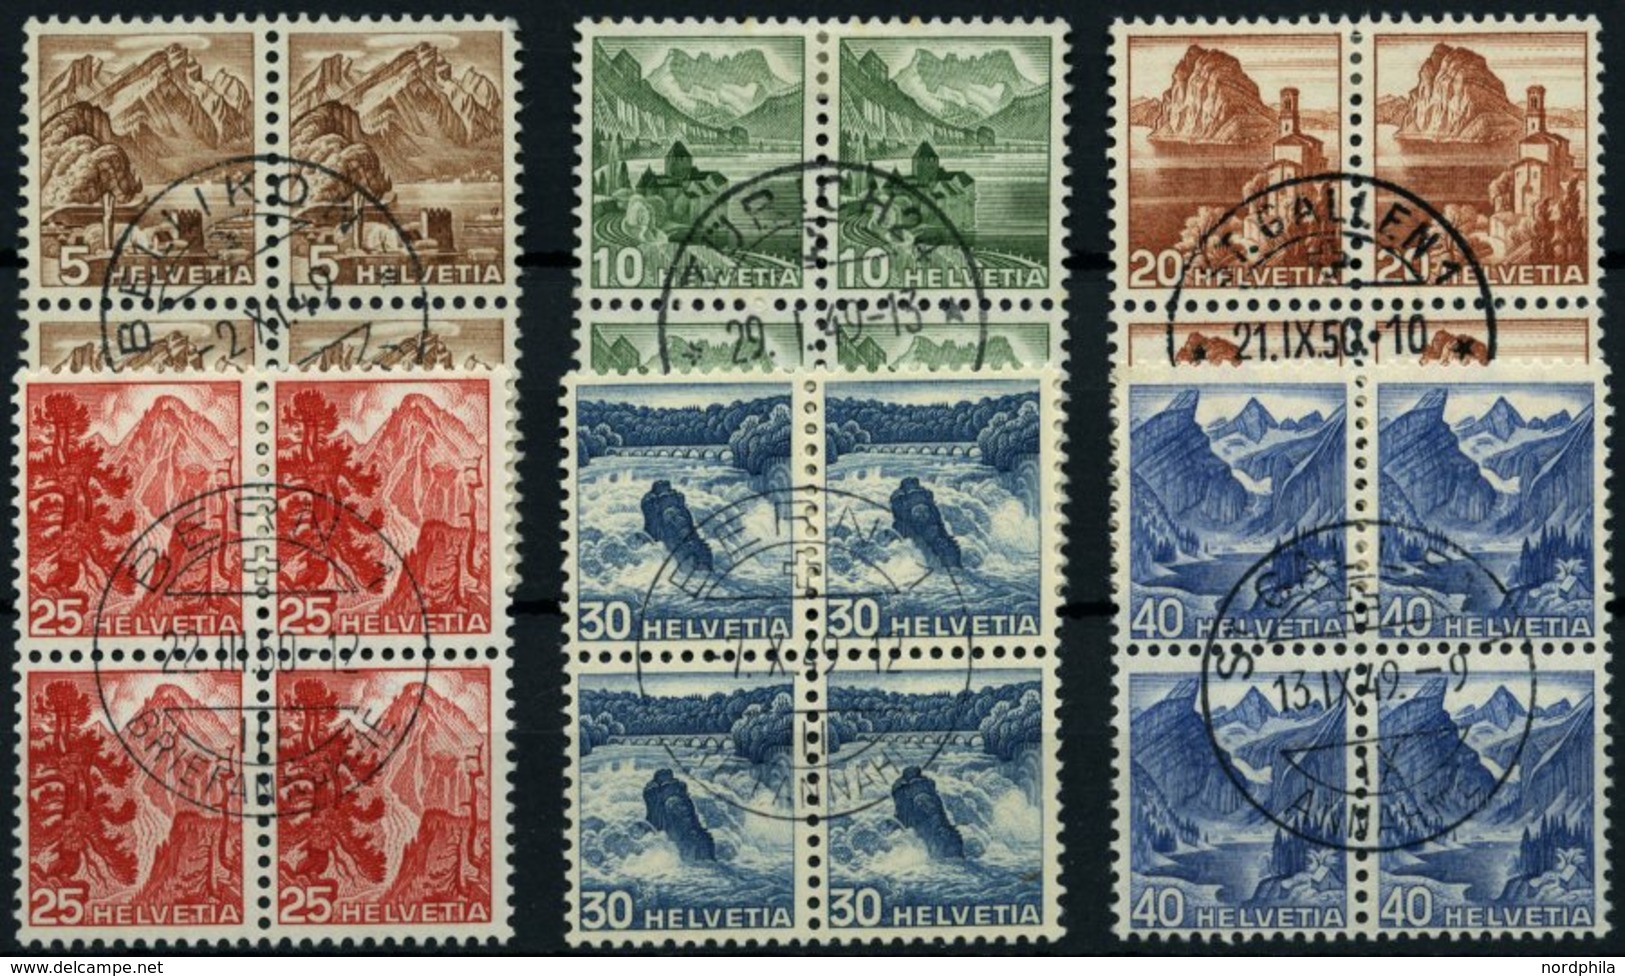 SCHWEIZ BUNDESPOST 500-05 VB O, 1948, Landschaften In Zentrisch Gestempelten Viererblocks, Prachtsatz - 1843-1852 Federal & Cantonal Stamps